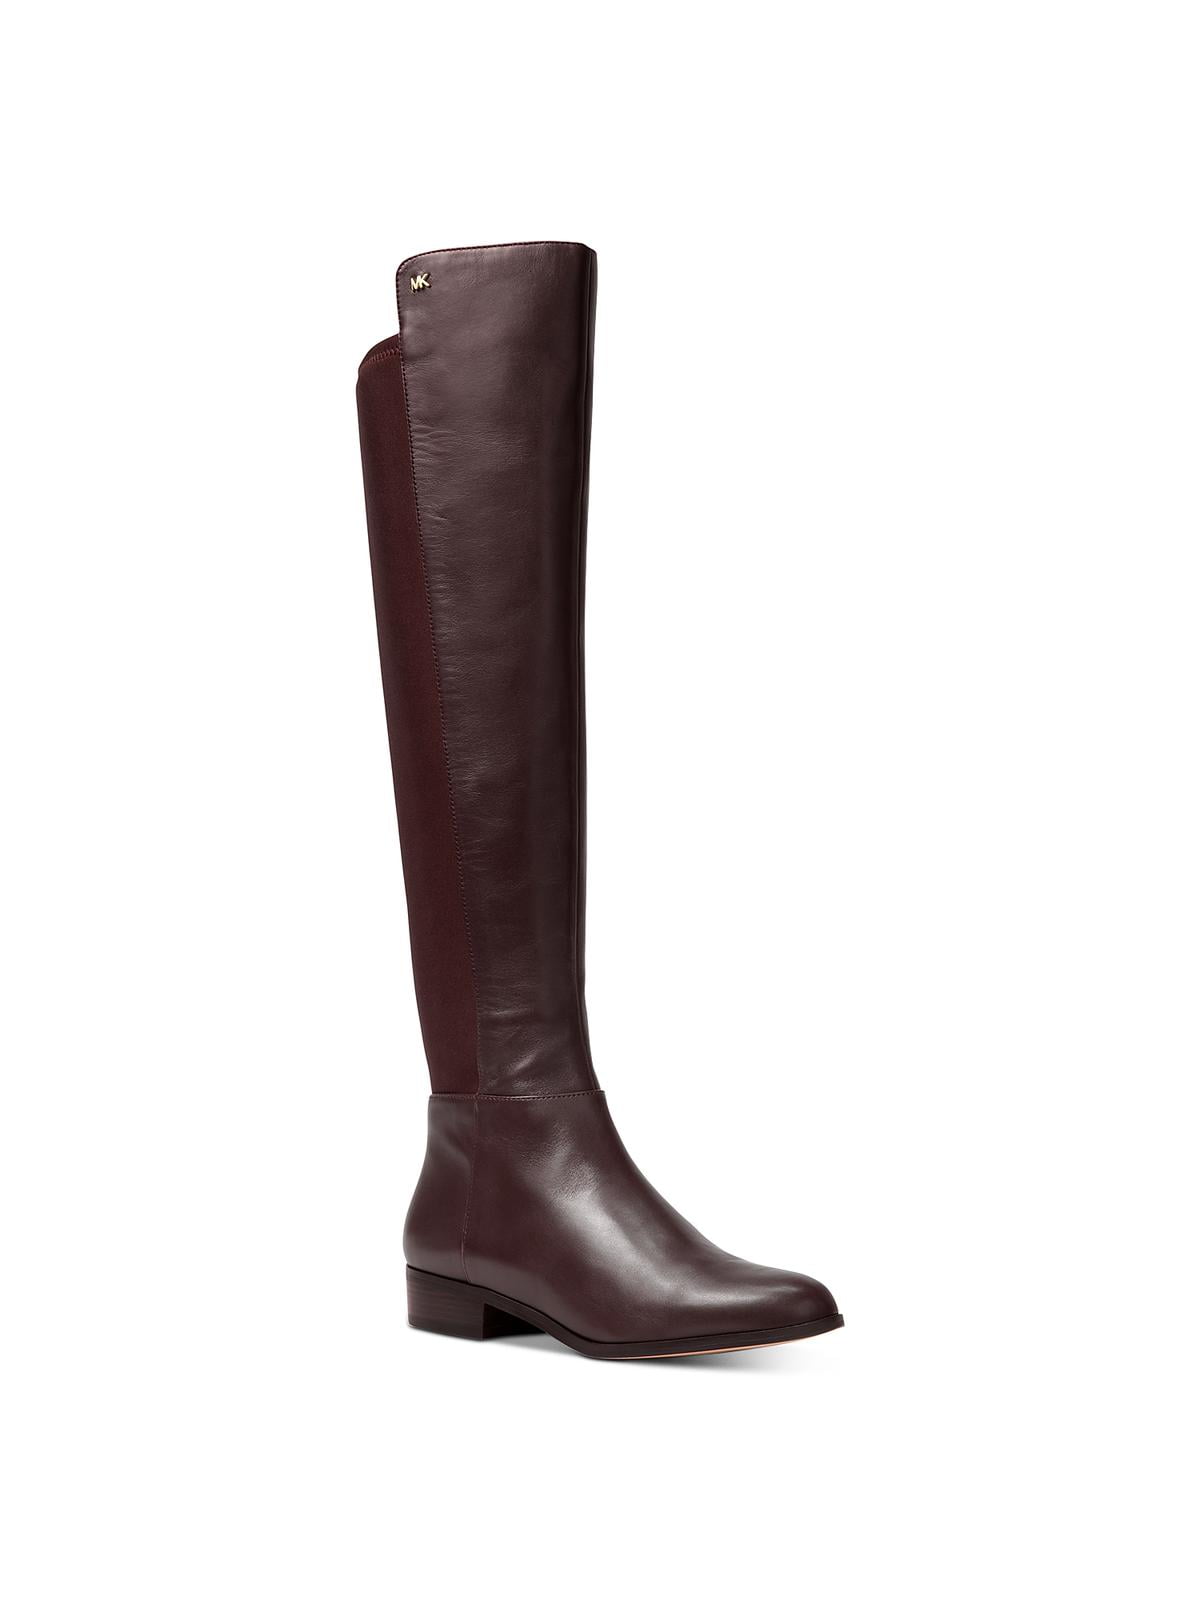 MICHAEL Kors Womens Bromley Leather Riding Boots 6 Medium (B,M) - Walmart.com